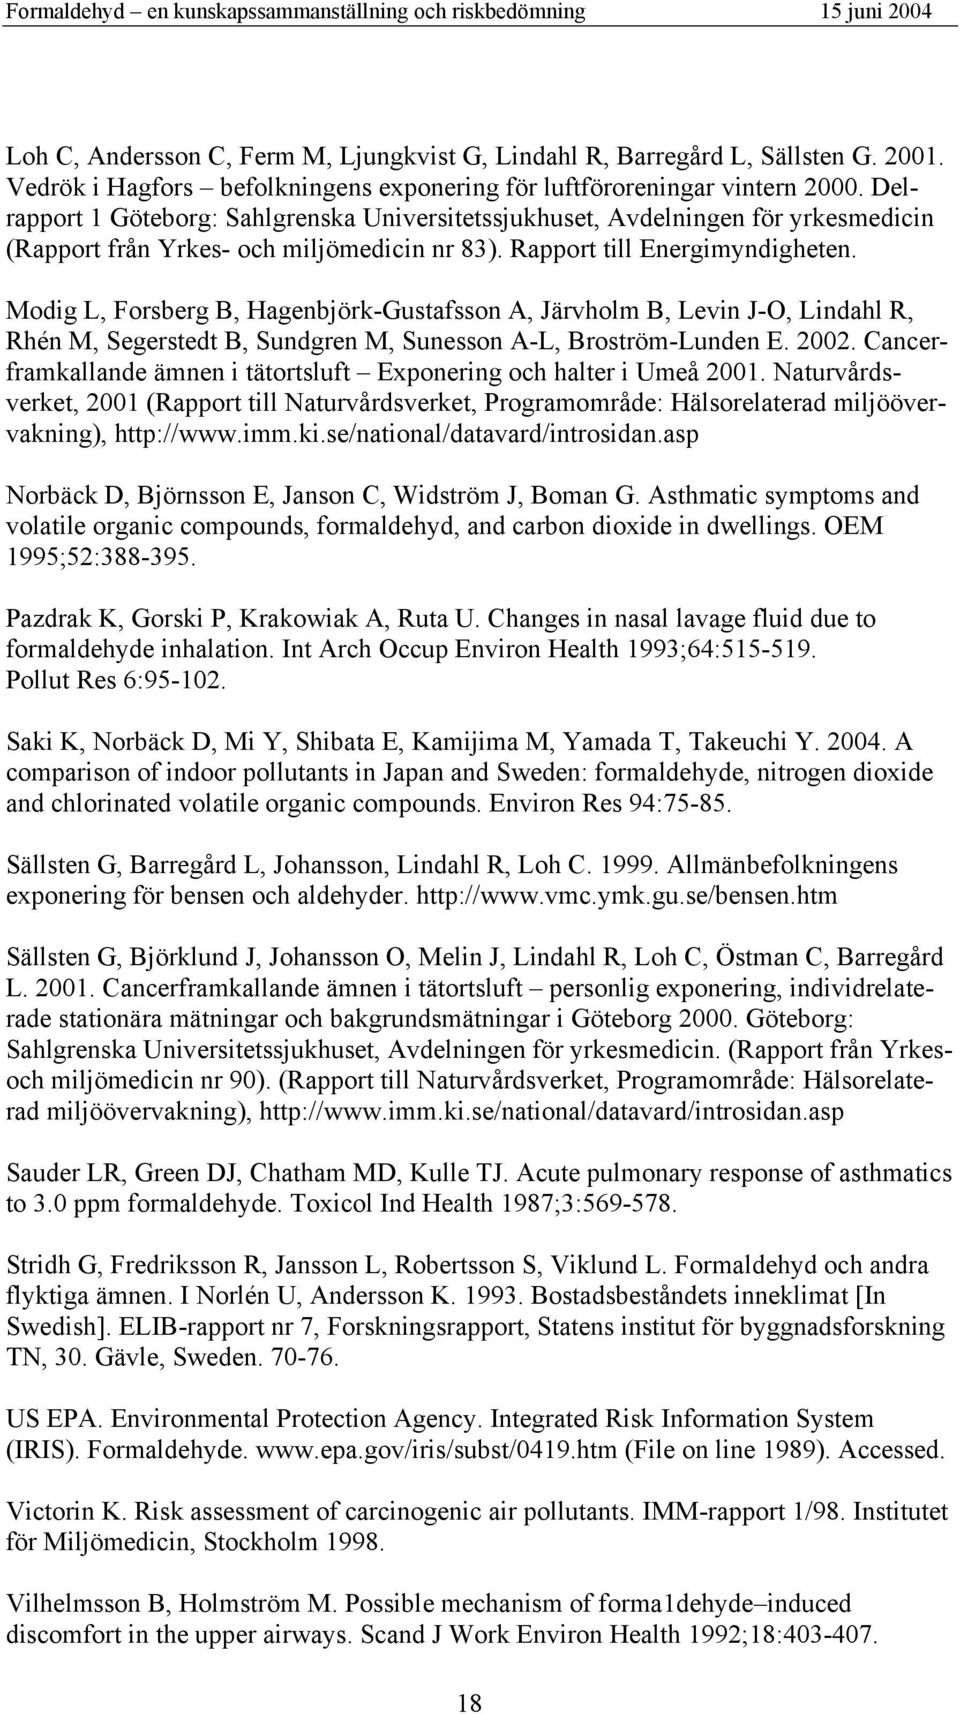 Modig L, Forsberg B, Hagenbjörk-Gustafsson A, Järvholm B, Levin J-O, Lindahl R, Rhén M, Segerstedt B, Sundgren M, Sunesson A-L, Broström-Lunden E. 2002.